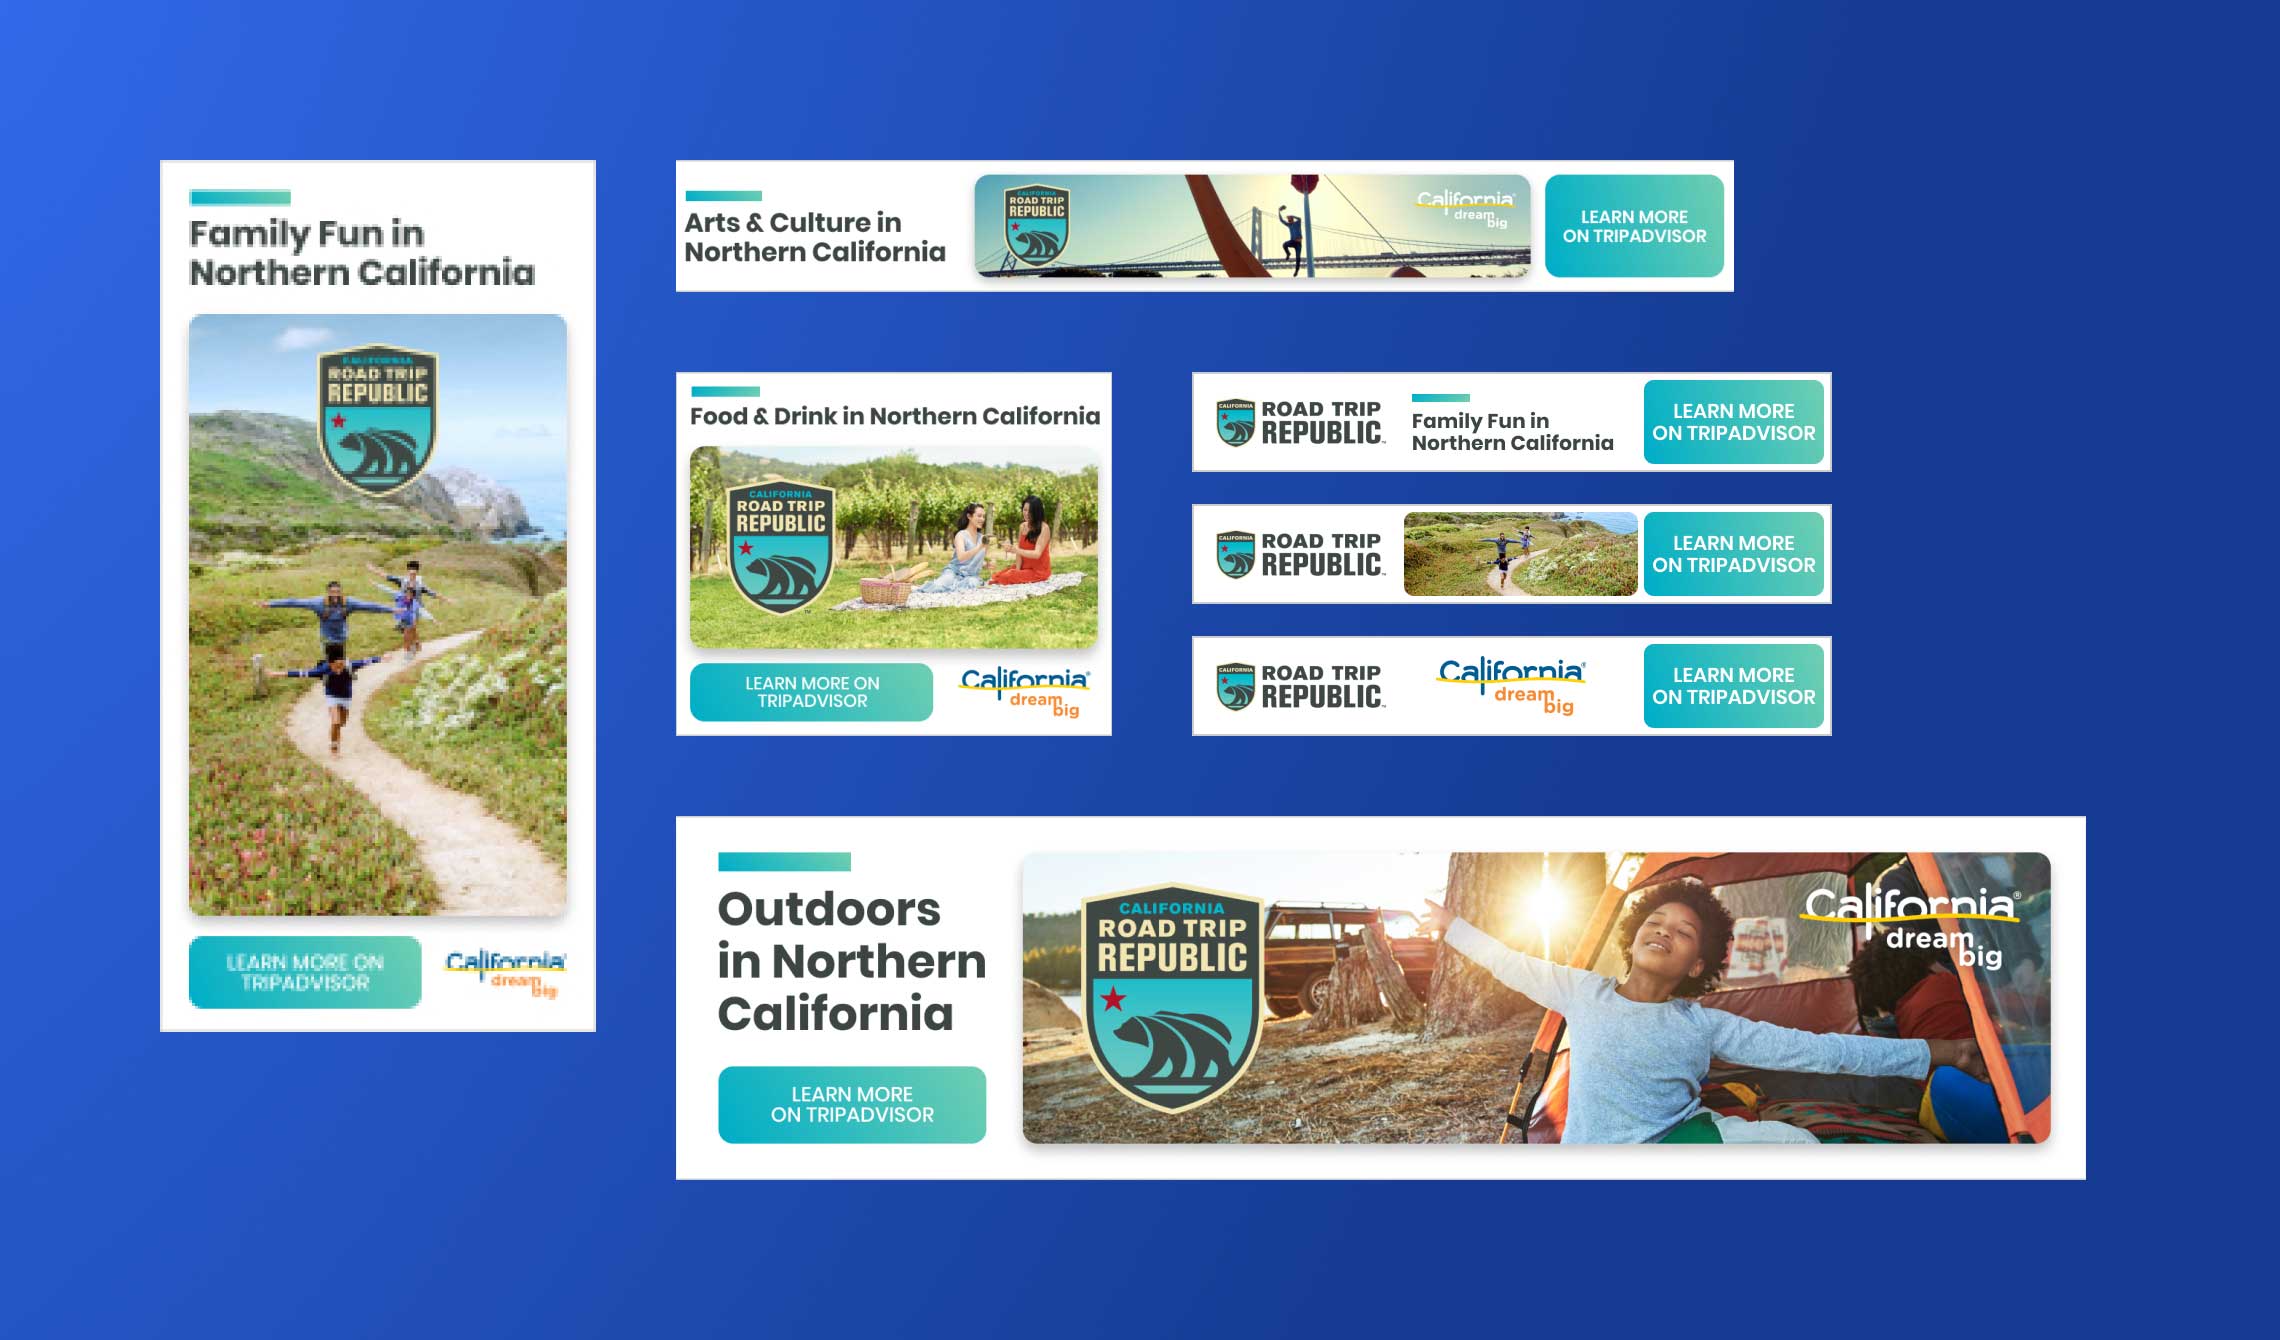 Visit California – Road Trip Republic Campaign – Tripadvisor – Rich Media Digital Display Banners